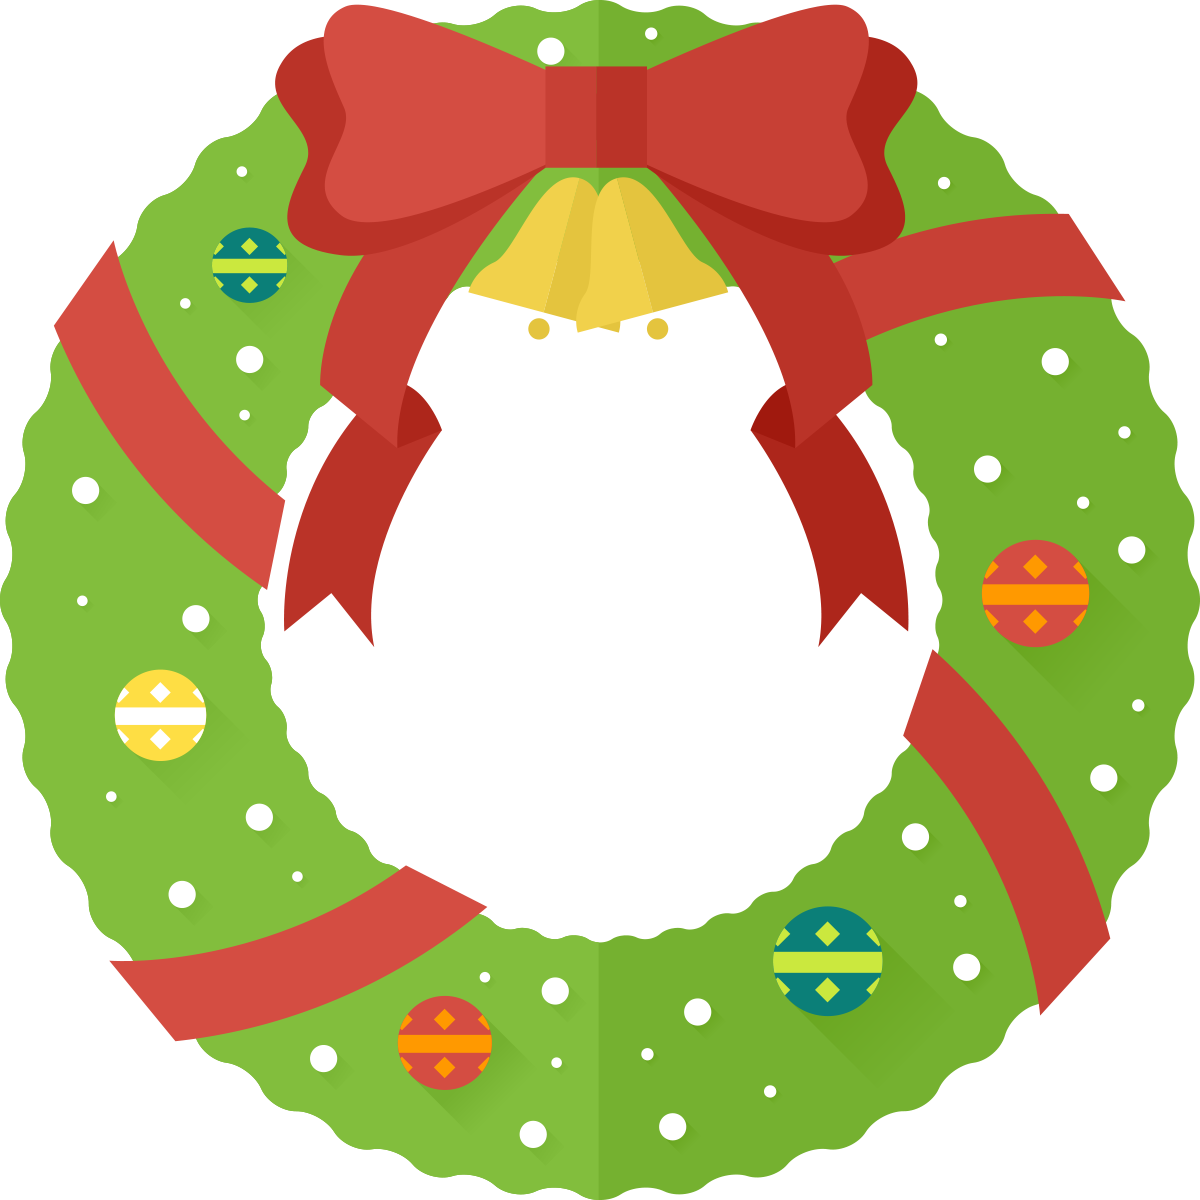 Free Cartoon Christmas Wreath